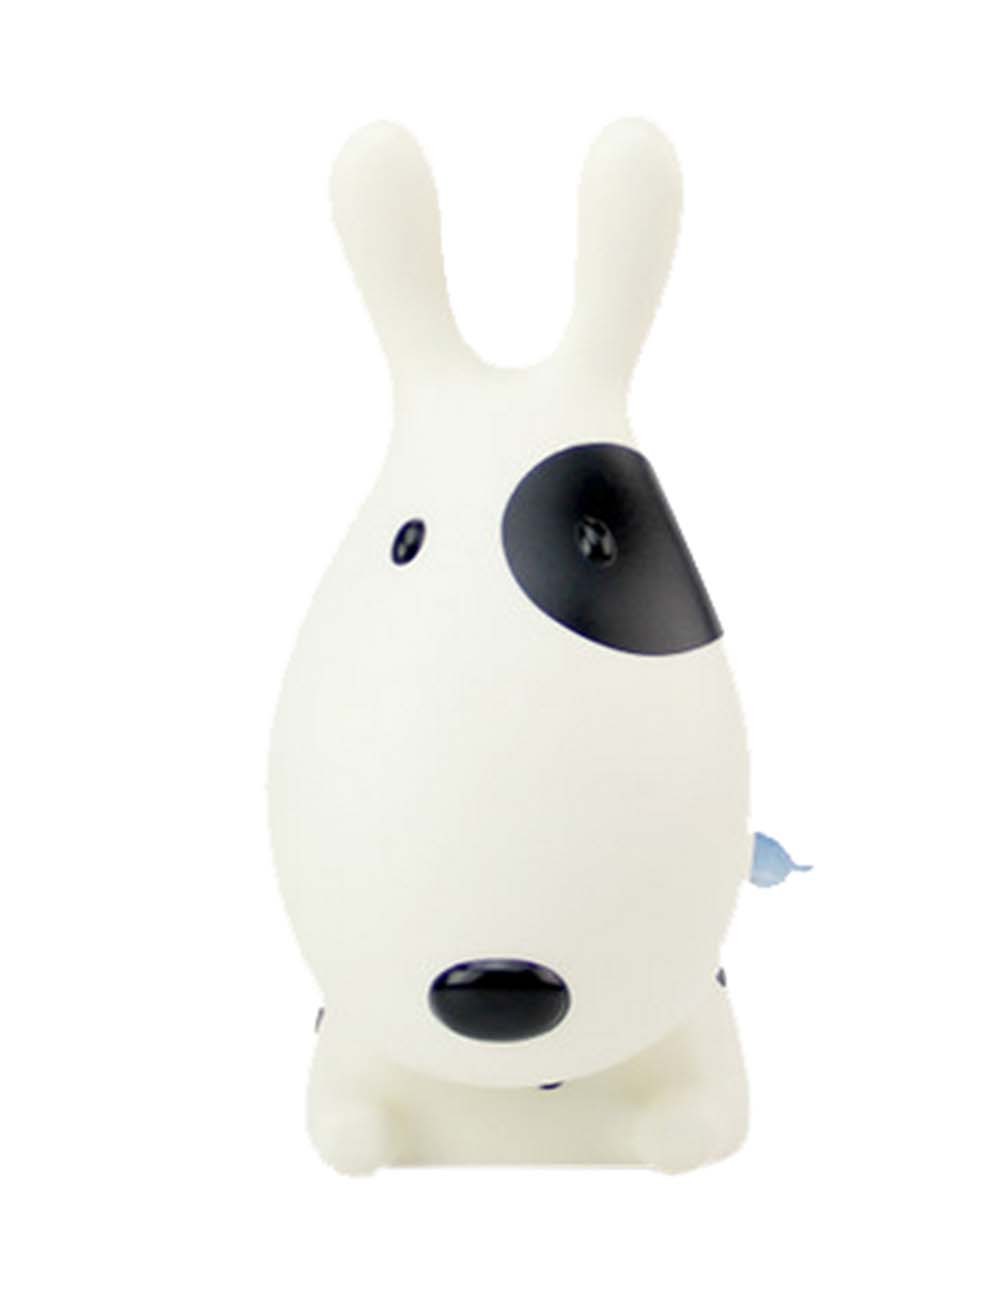 Creative Fahionable White Dog USB Lamp, Rechargeable LED Reading Lamp